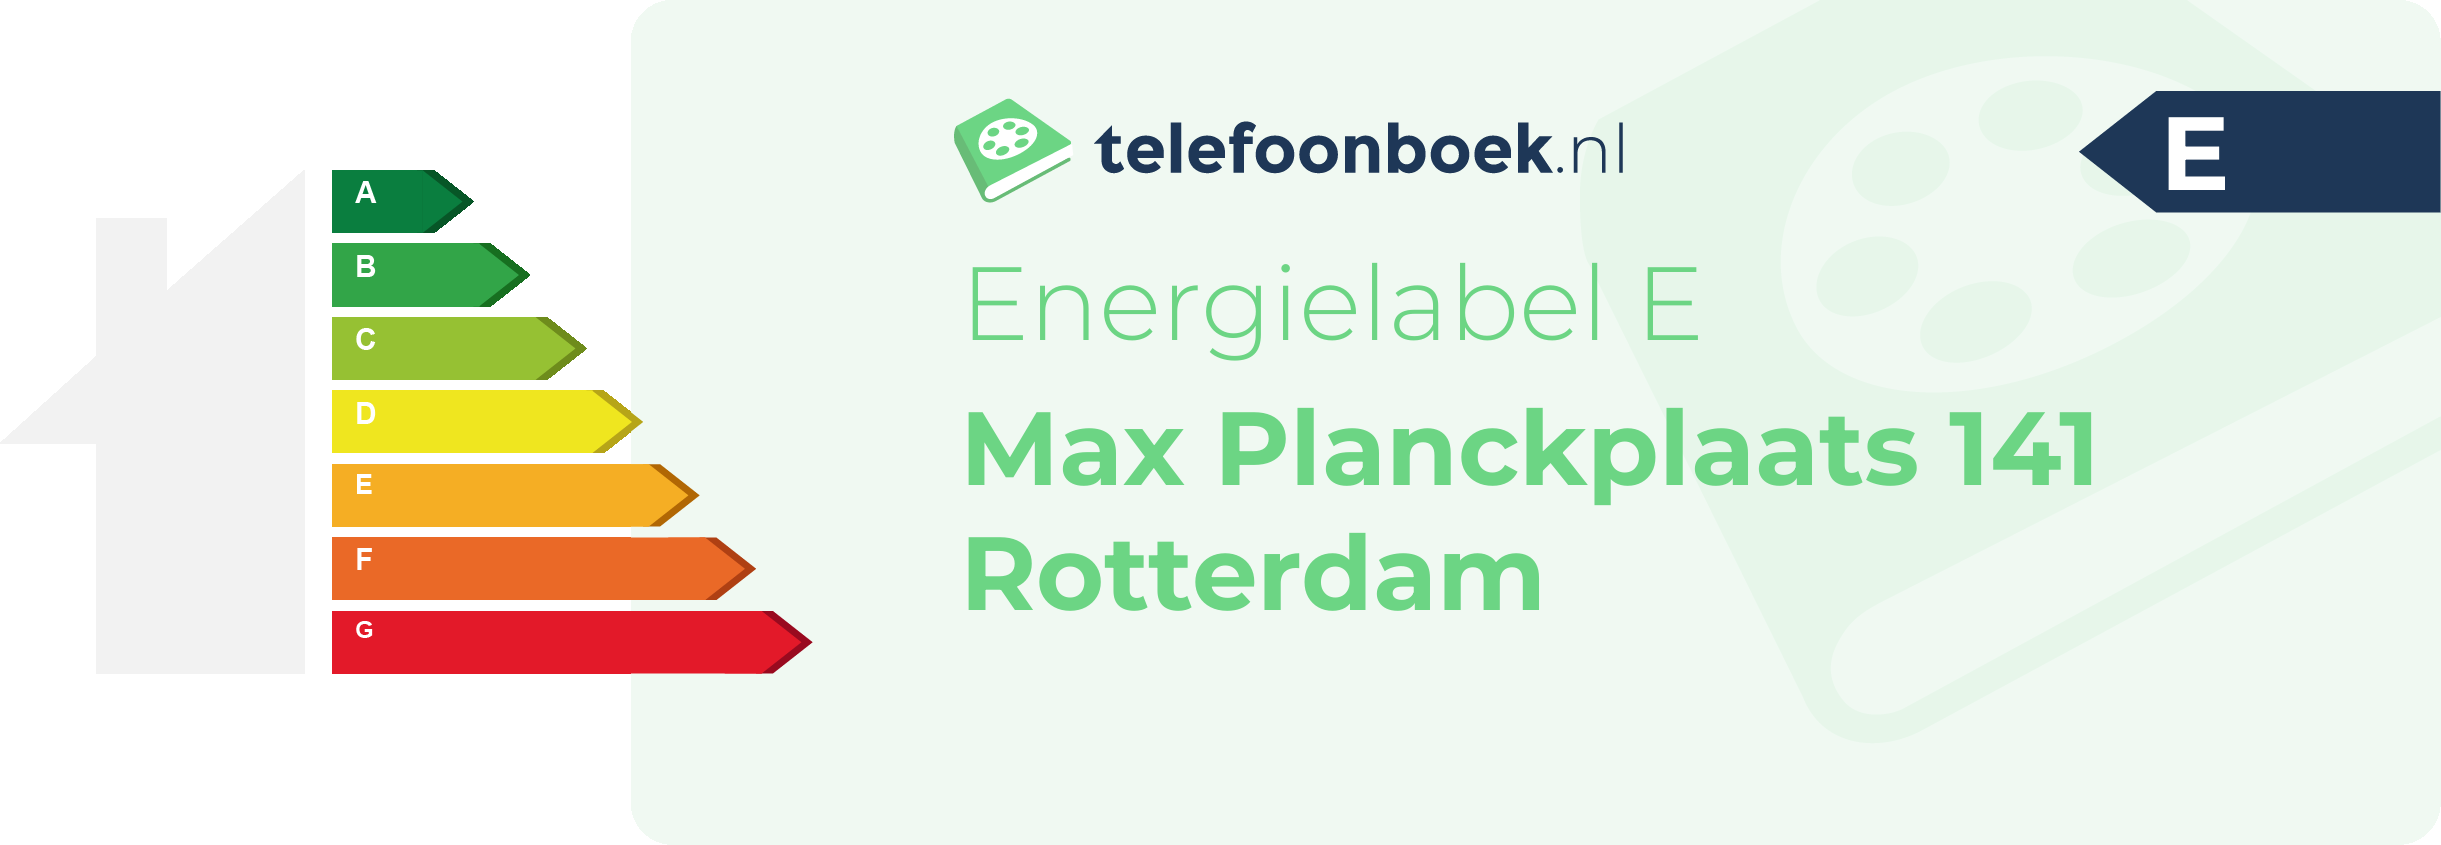 Energielabel Max Planckplaats 141 Rotterdam